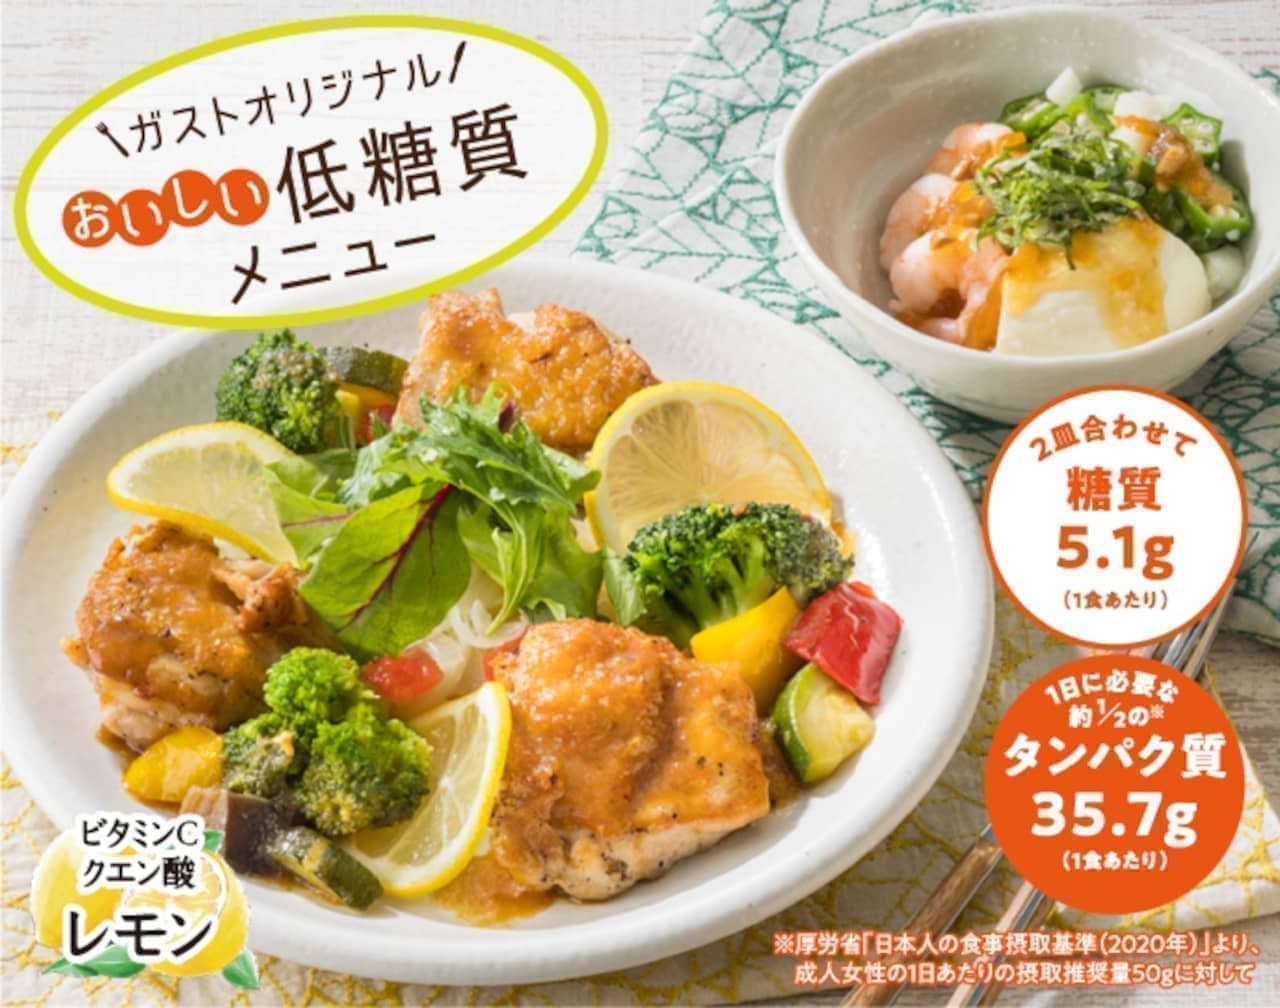 Gusto "Umami Spicy Soupless Tantanmen," "Seafood Sara Udon," "Cold Salted Lemon Ramen," "Lemon Chicken Butter Sautee & Shrimp and Yam Okra Tofu